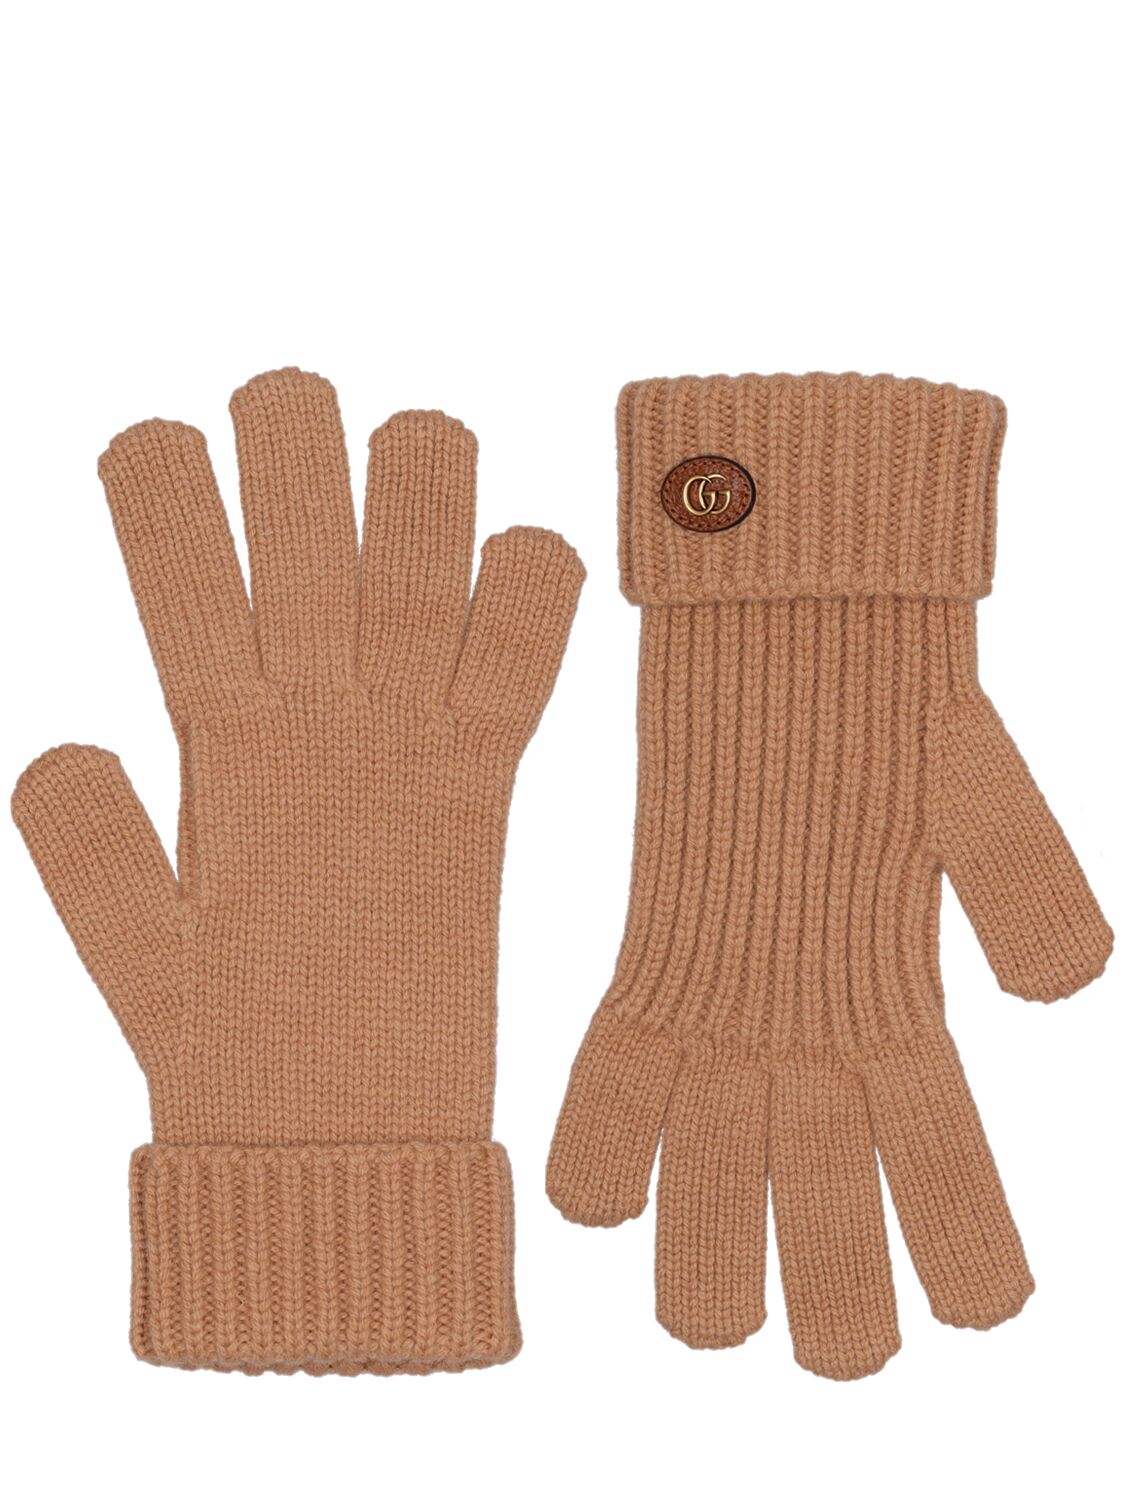 Image of Wool Blend Gloves